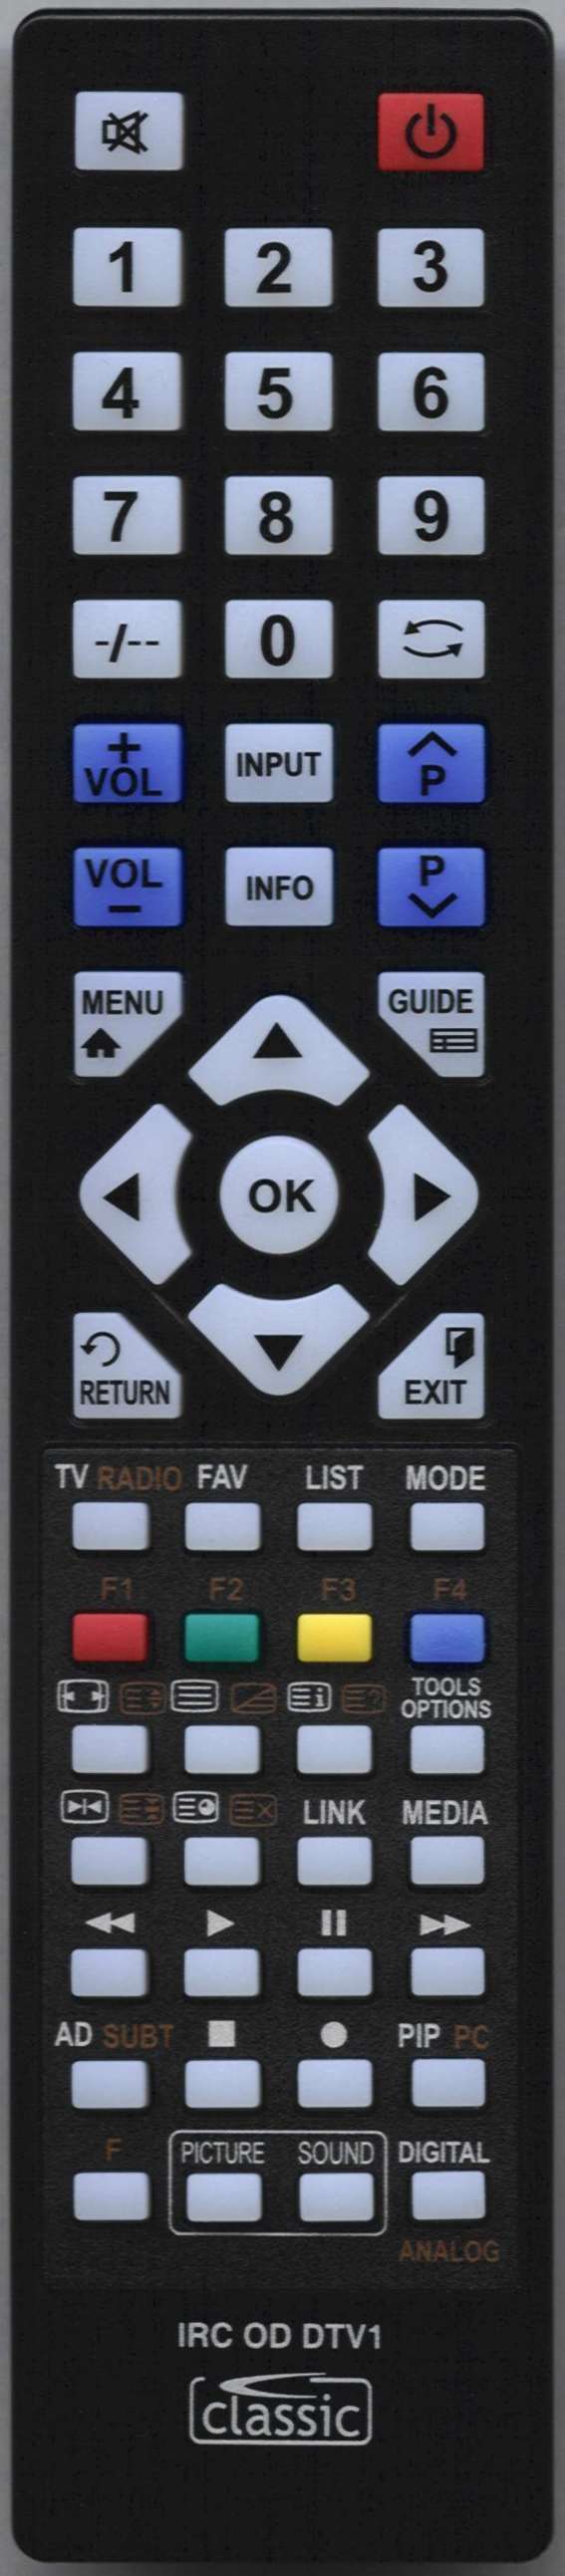 JVC RM-C 1980 Remote Control